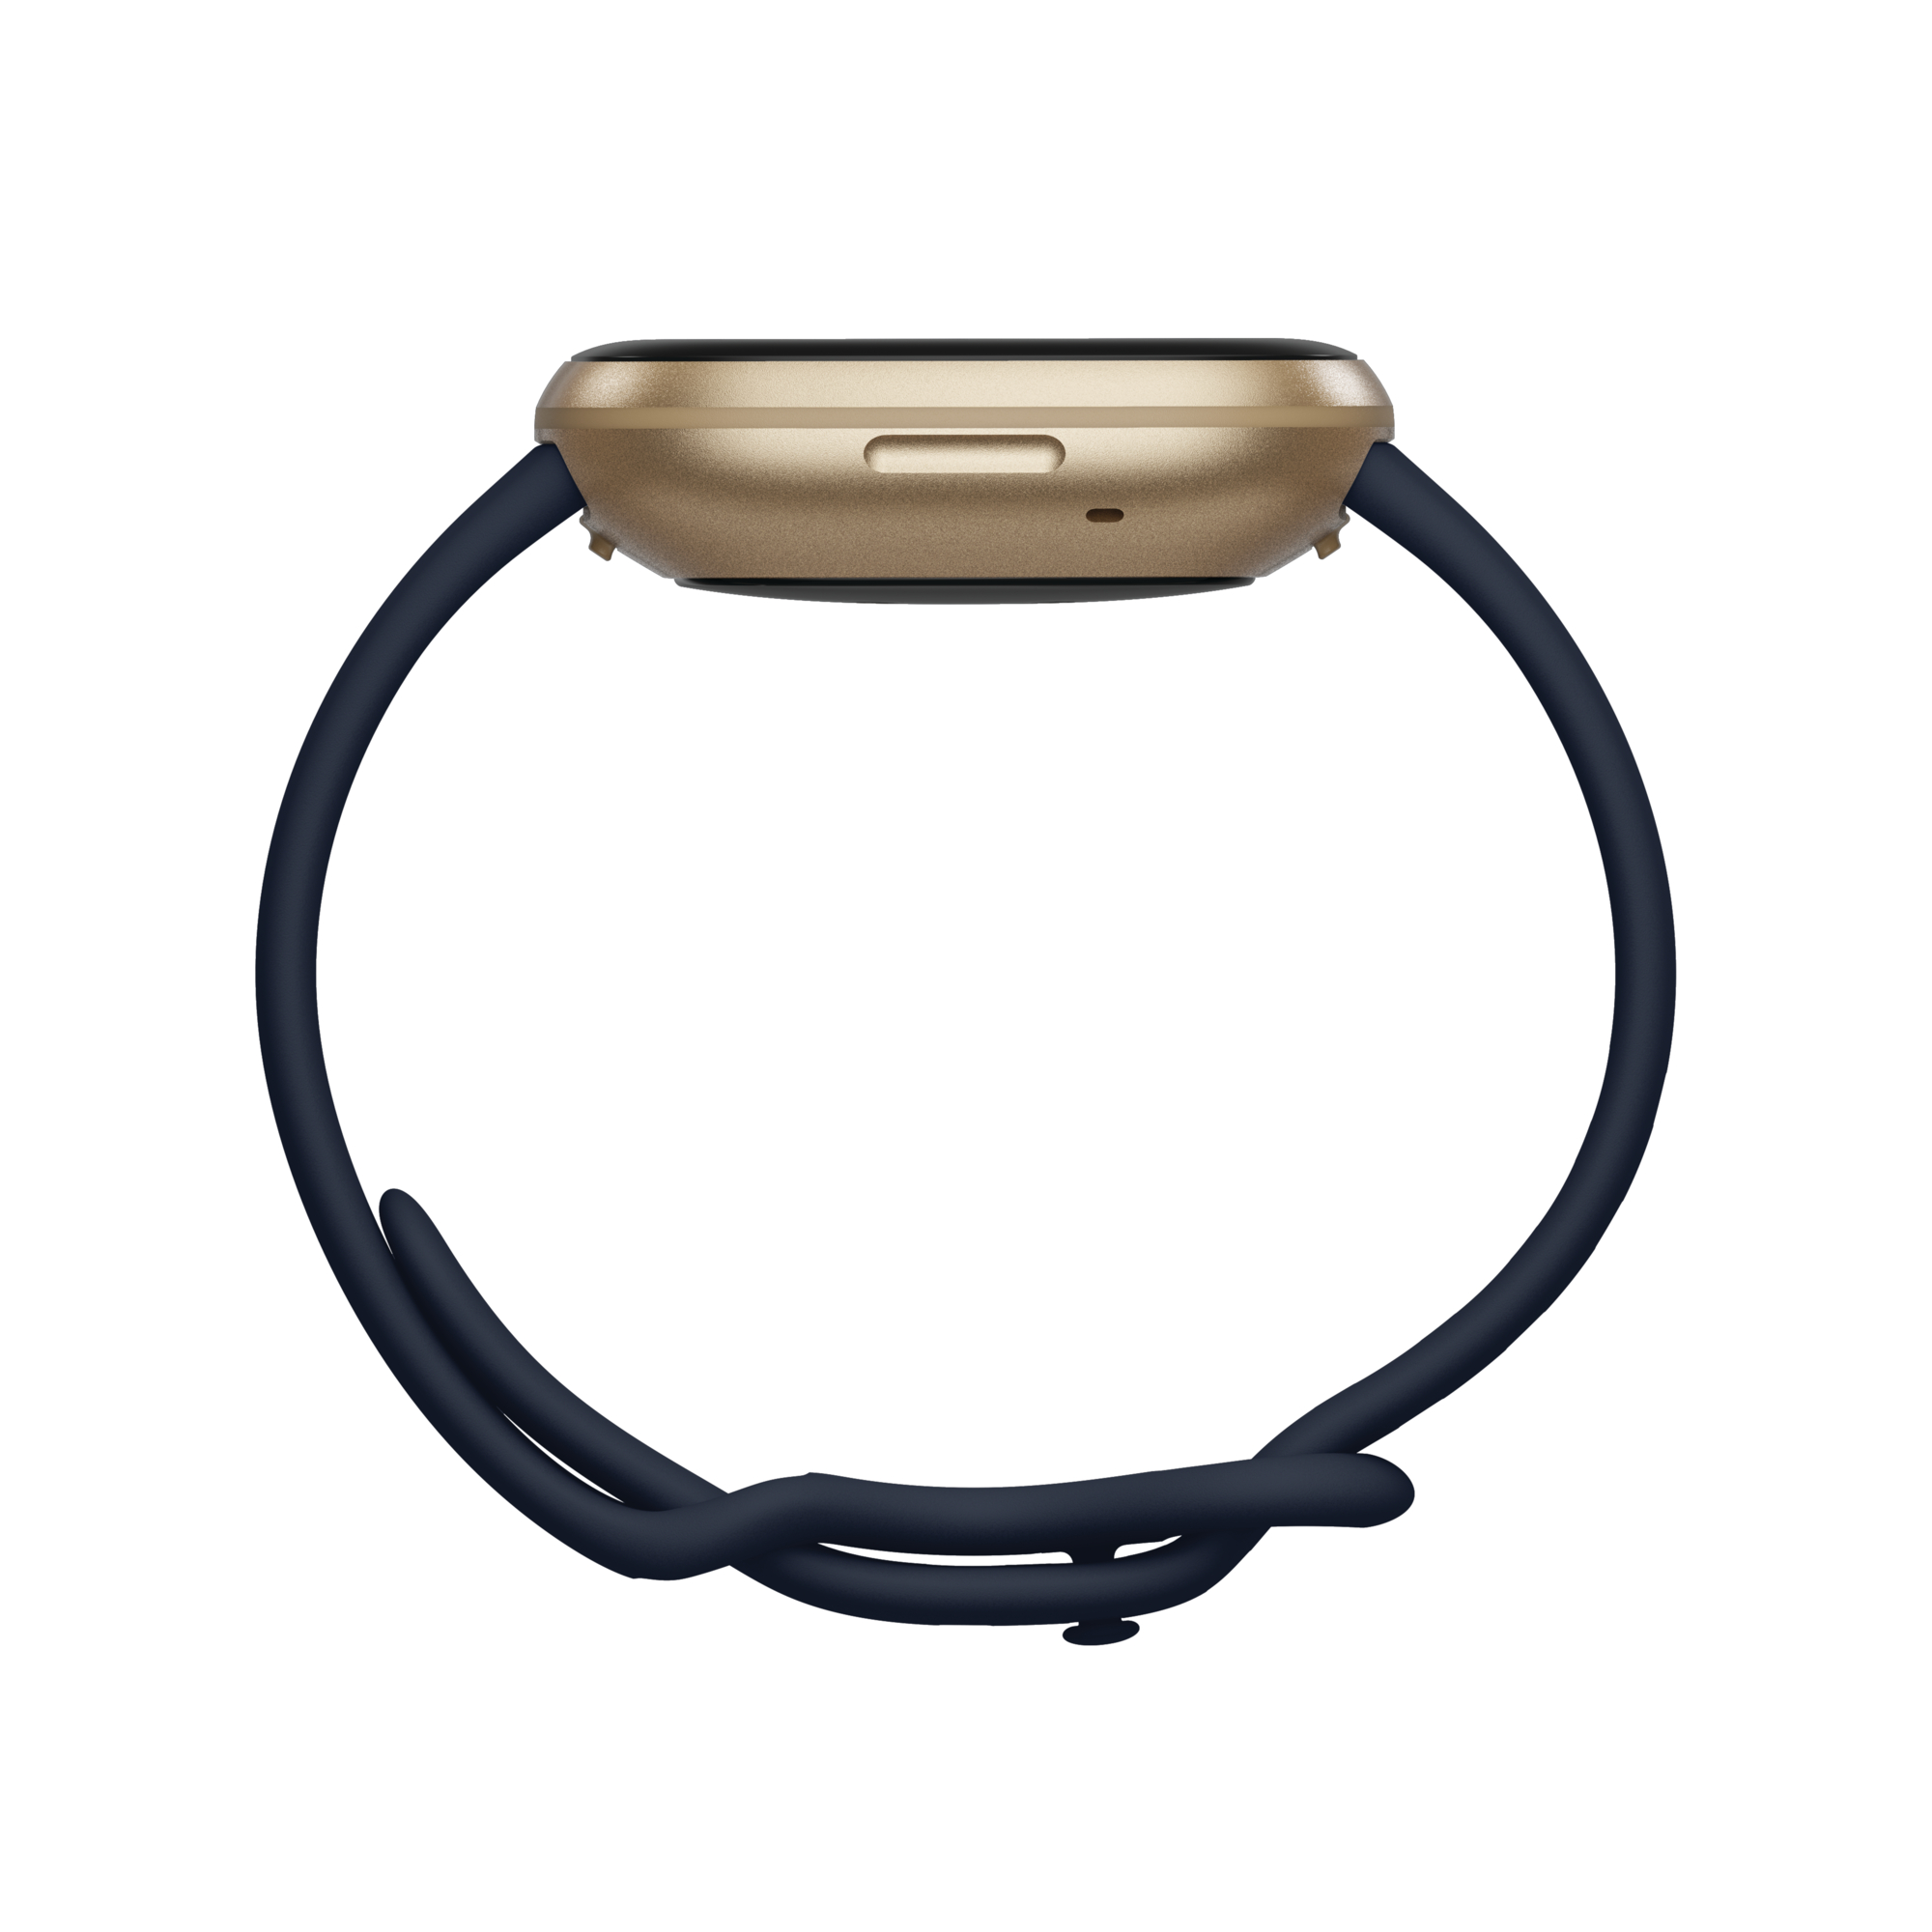 Fitbit Versa 3 Health & Fitness Smartwatch - Midnight/Soft Gold Aluminum - image 5 of 6